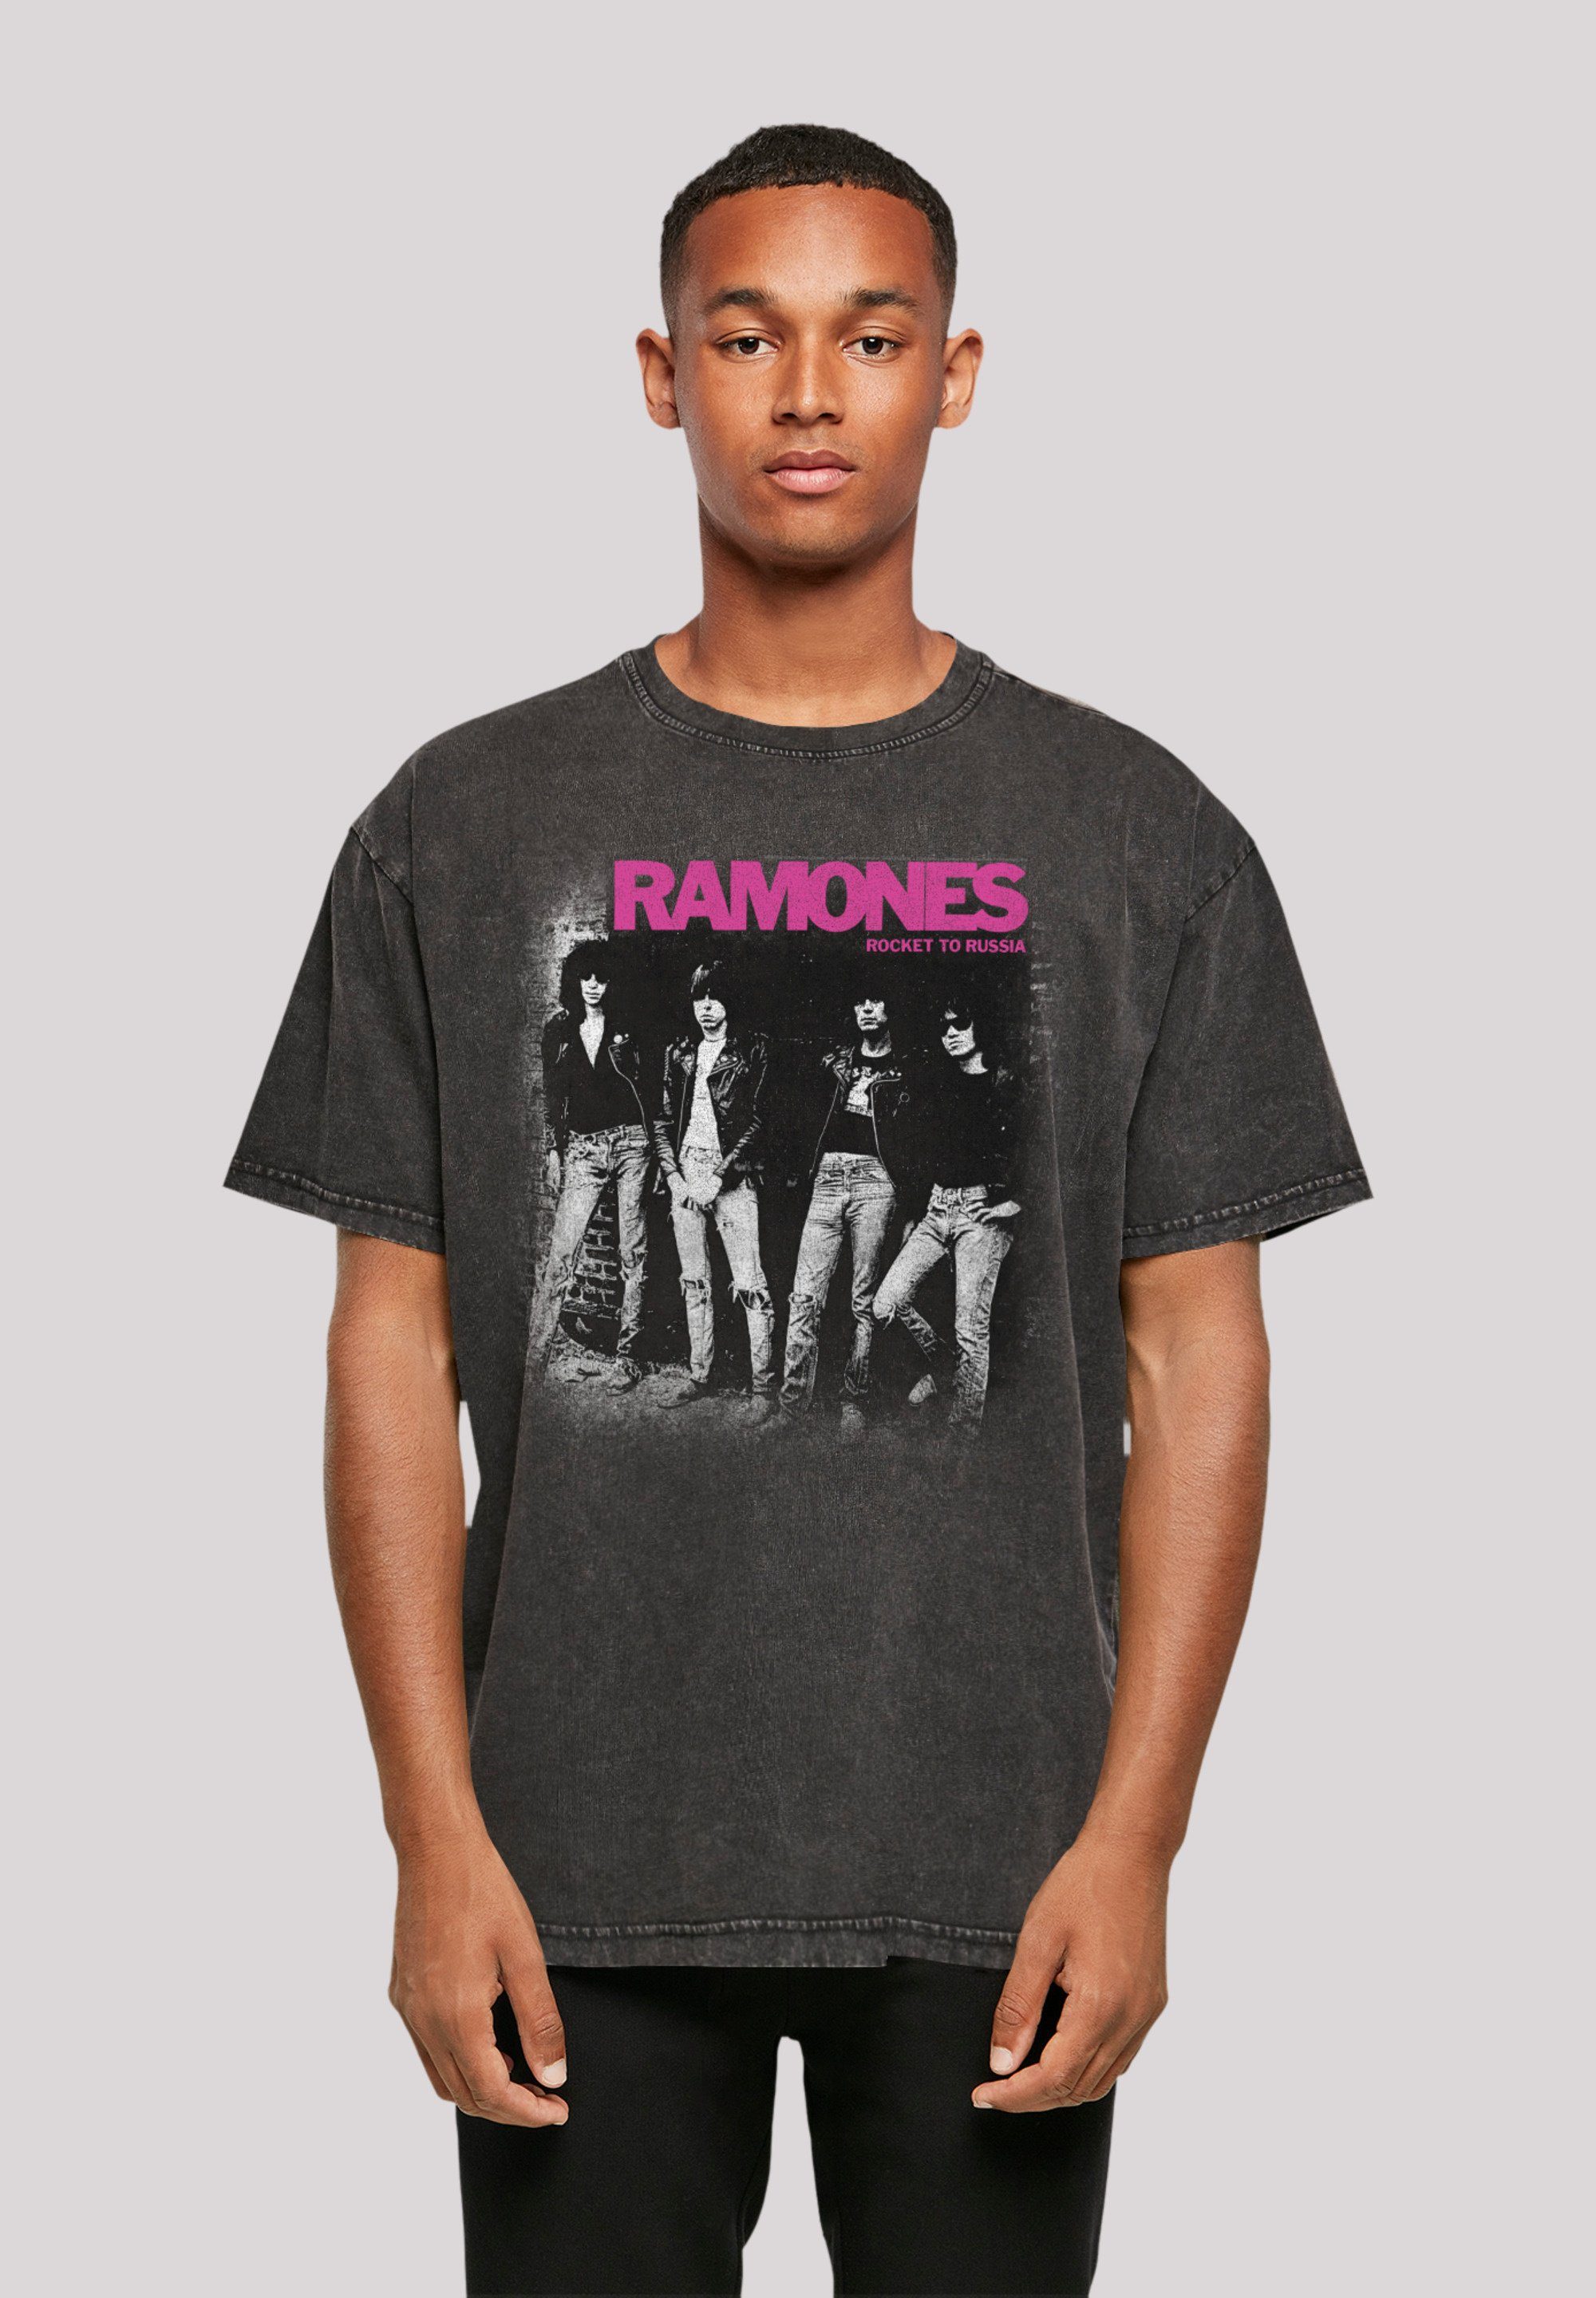 F4NT4STIC T-Shirt Ramones Rock Musik Rocket To Qualität, Russia Premium Faded schwarz Band, Band Rock-Musik